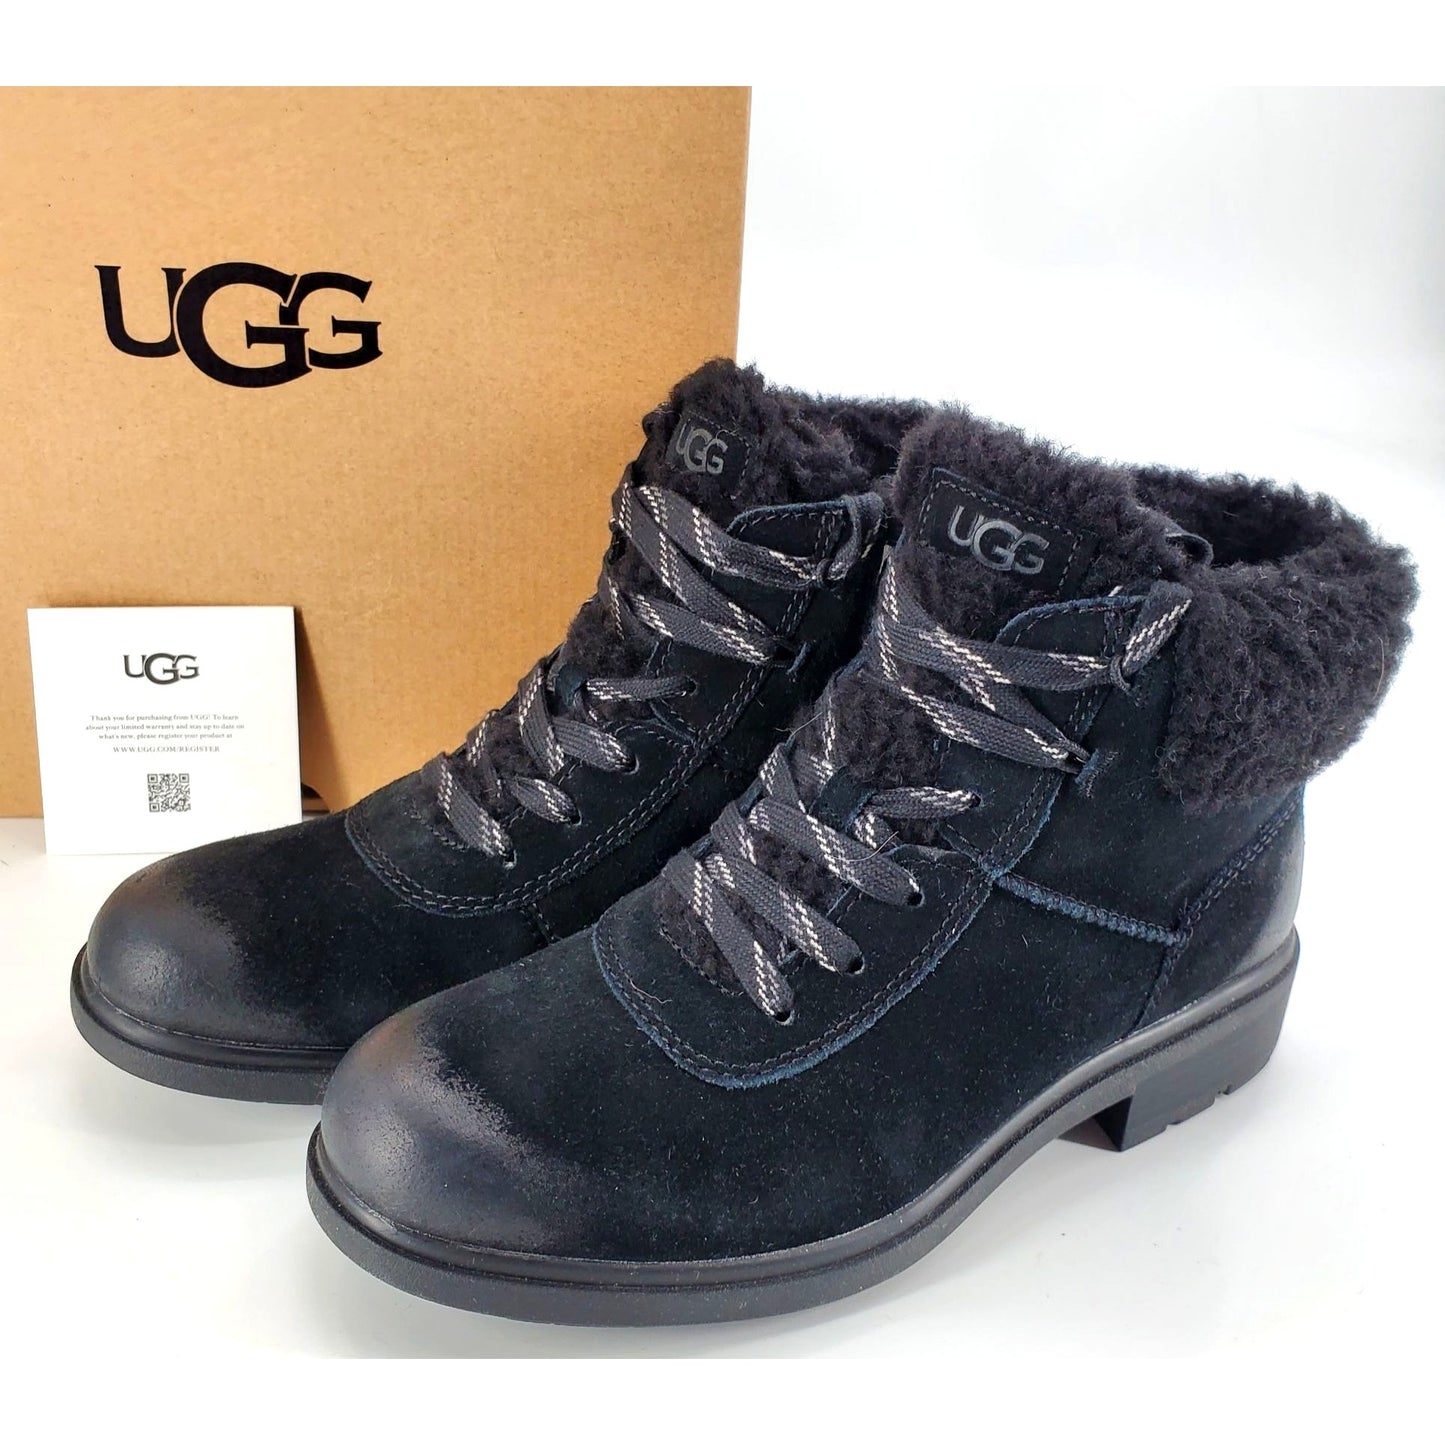 UGG Australia Boots Harrison Cozy Lug Lace-Up Waterproof Outdoor Suede Fur